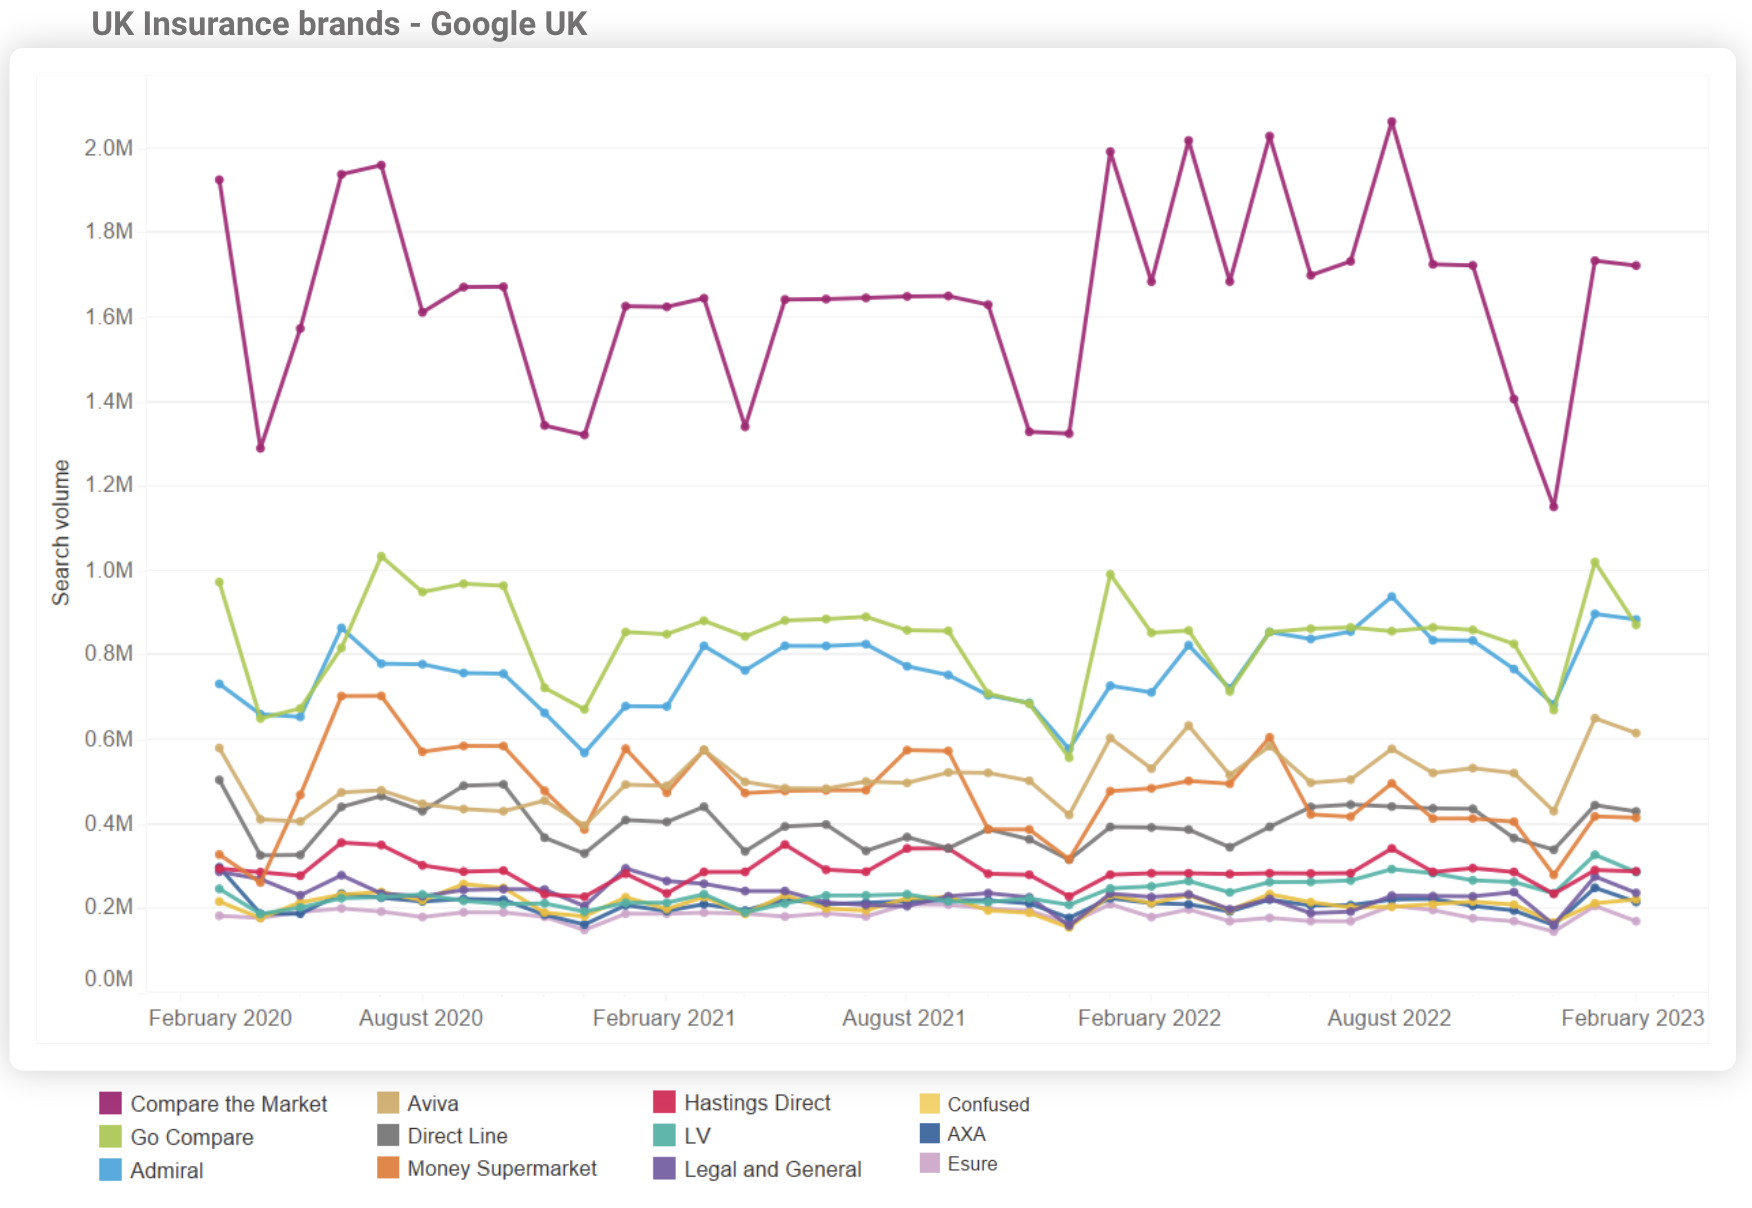 UK insurance brand search volume most popular